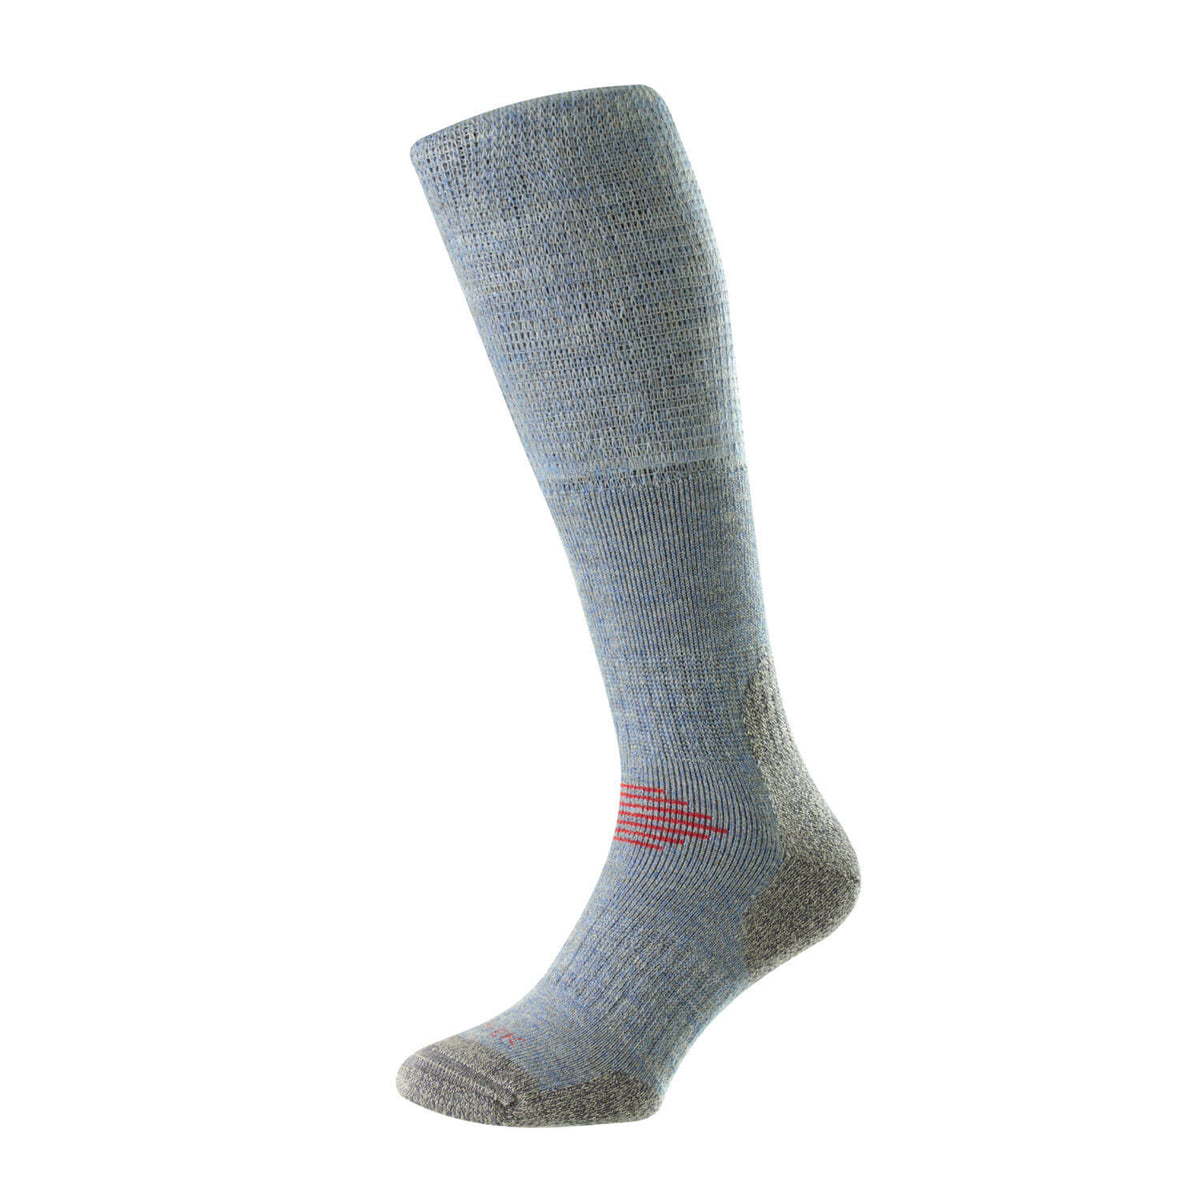 Mountain Comfort Top Socks - Denim Grey